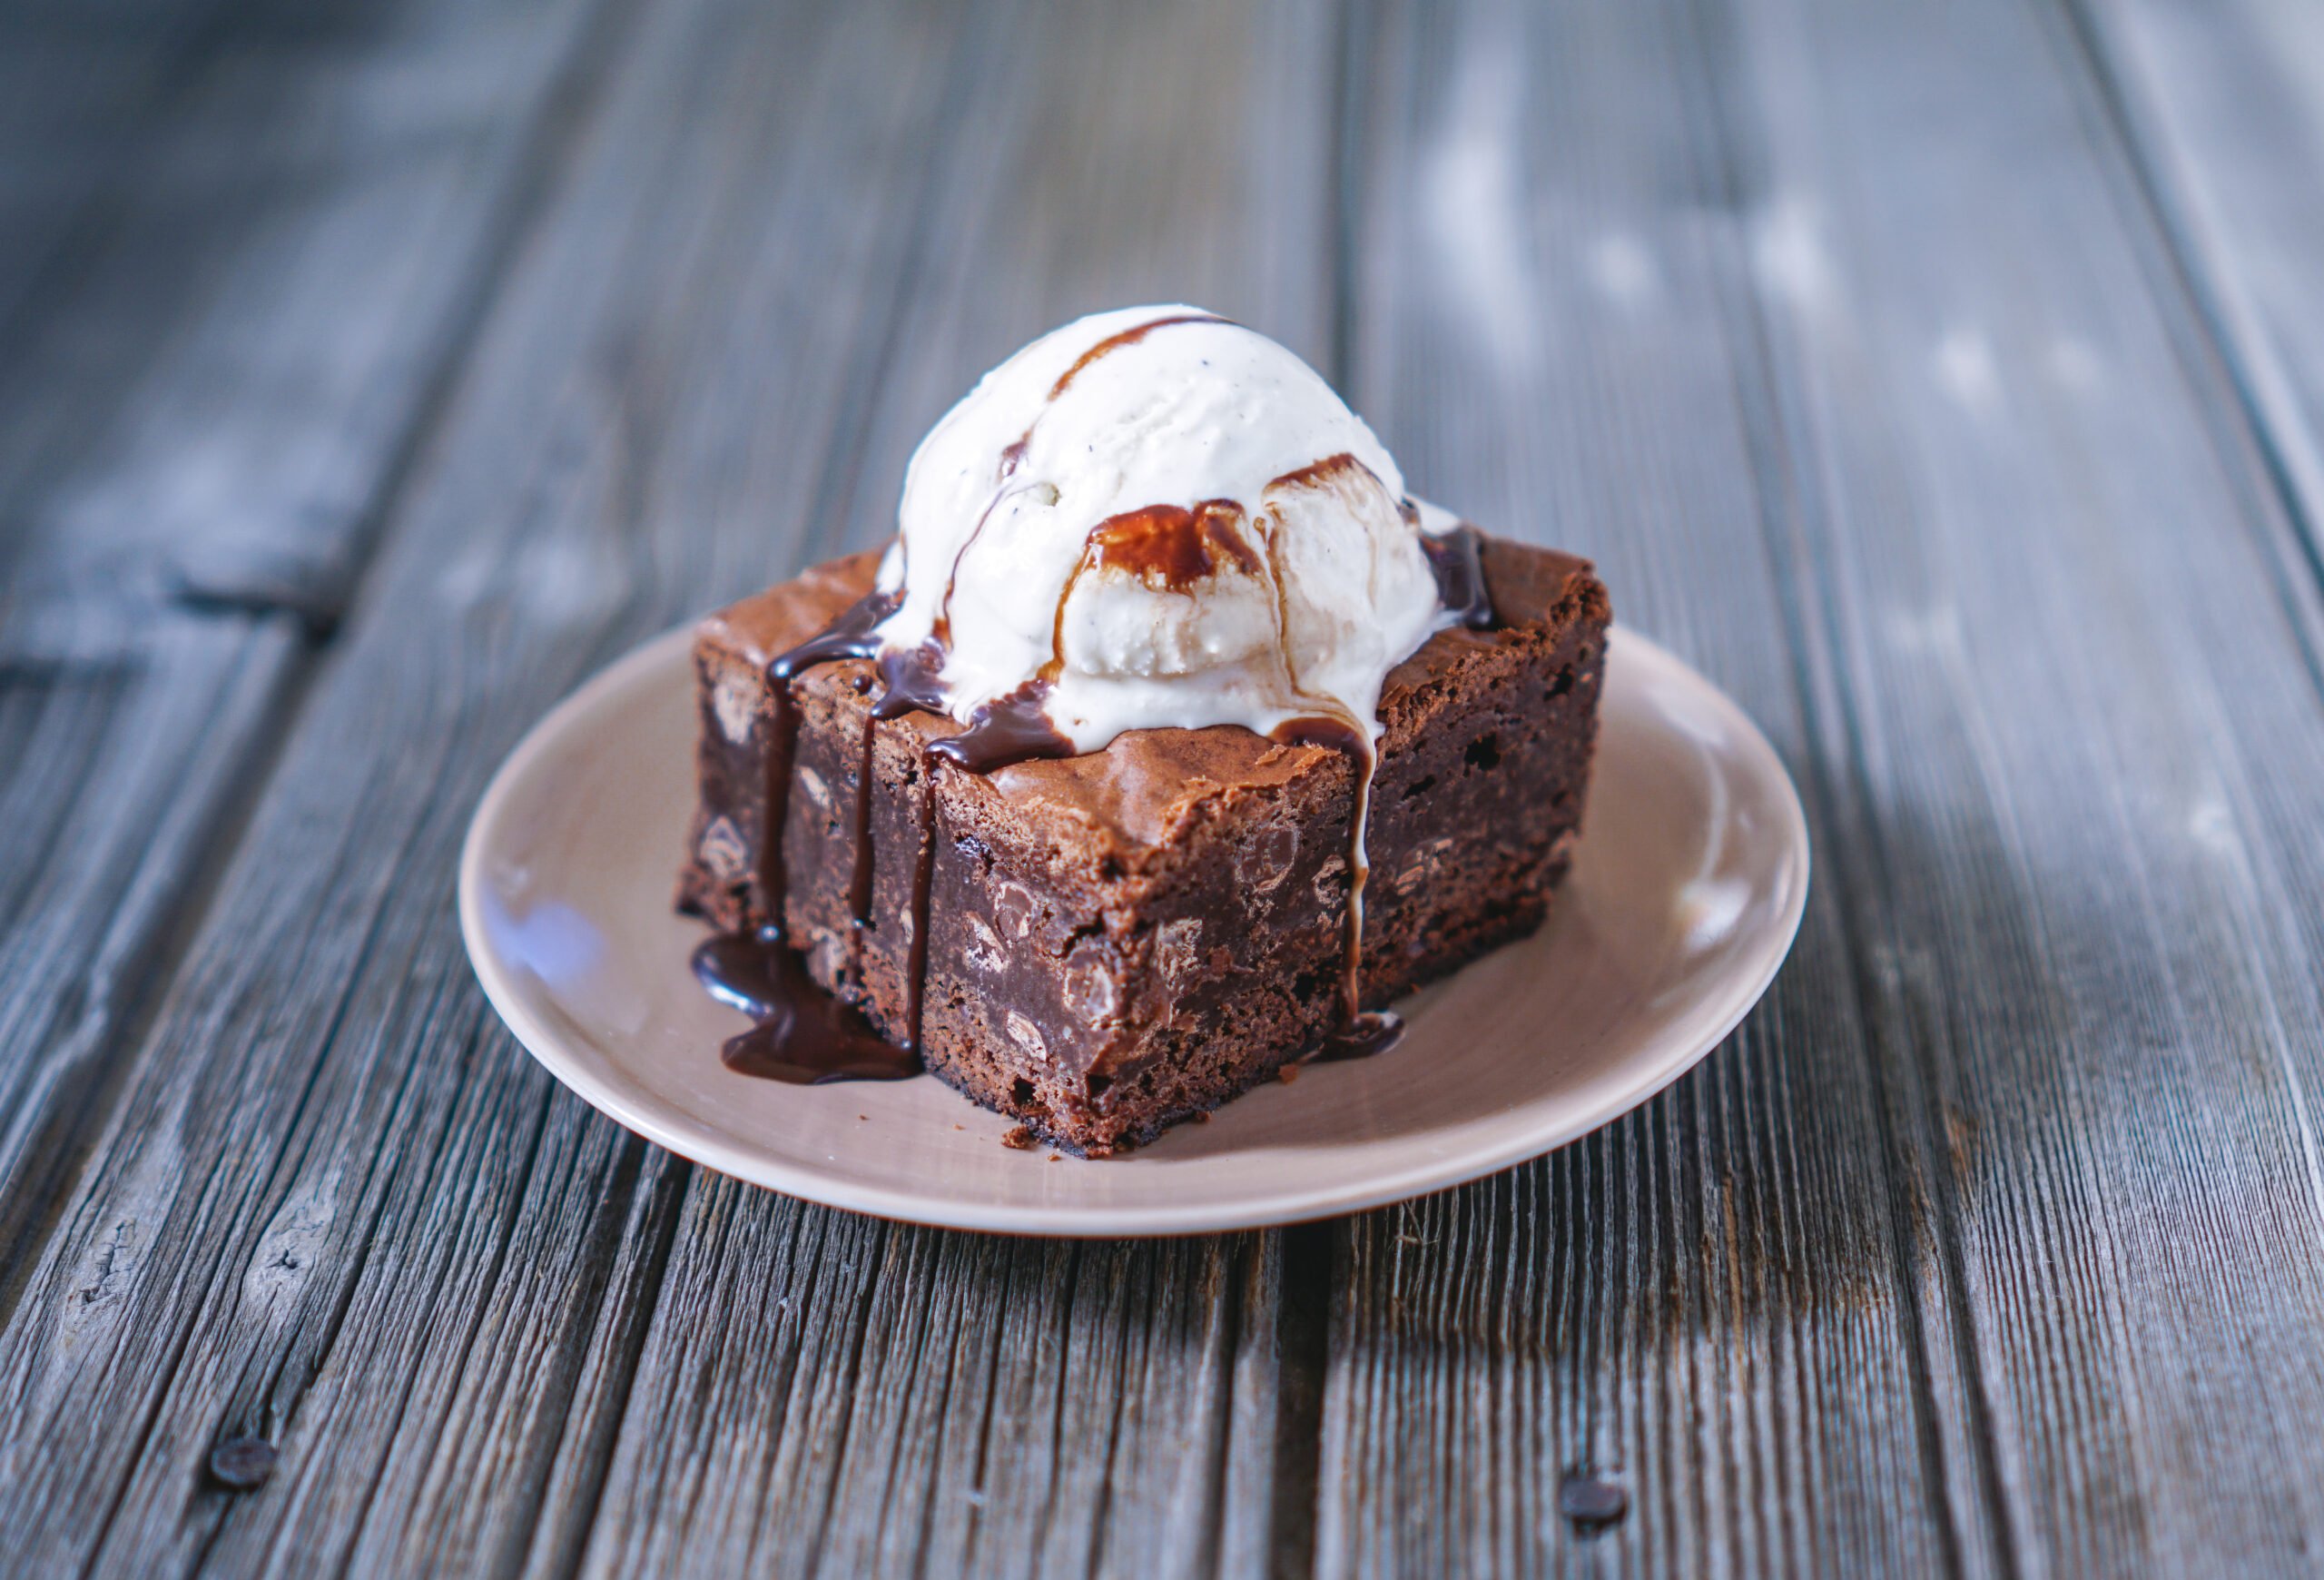 Chocolate Fudgy Brownie with Vanilla Ice Cream on top.